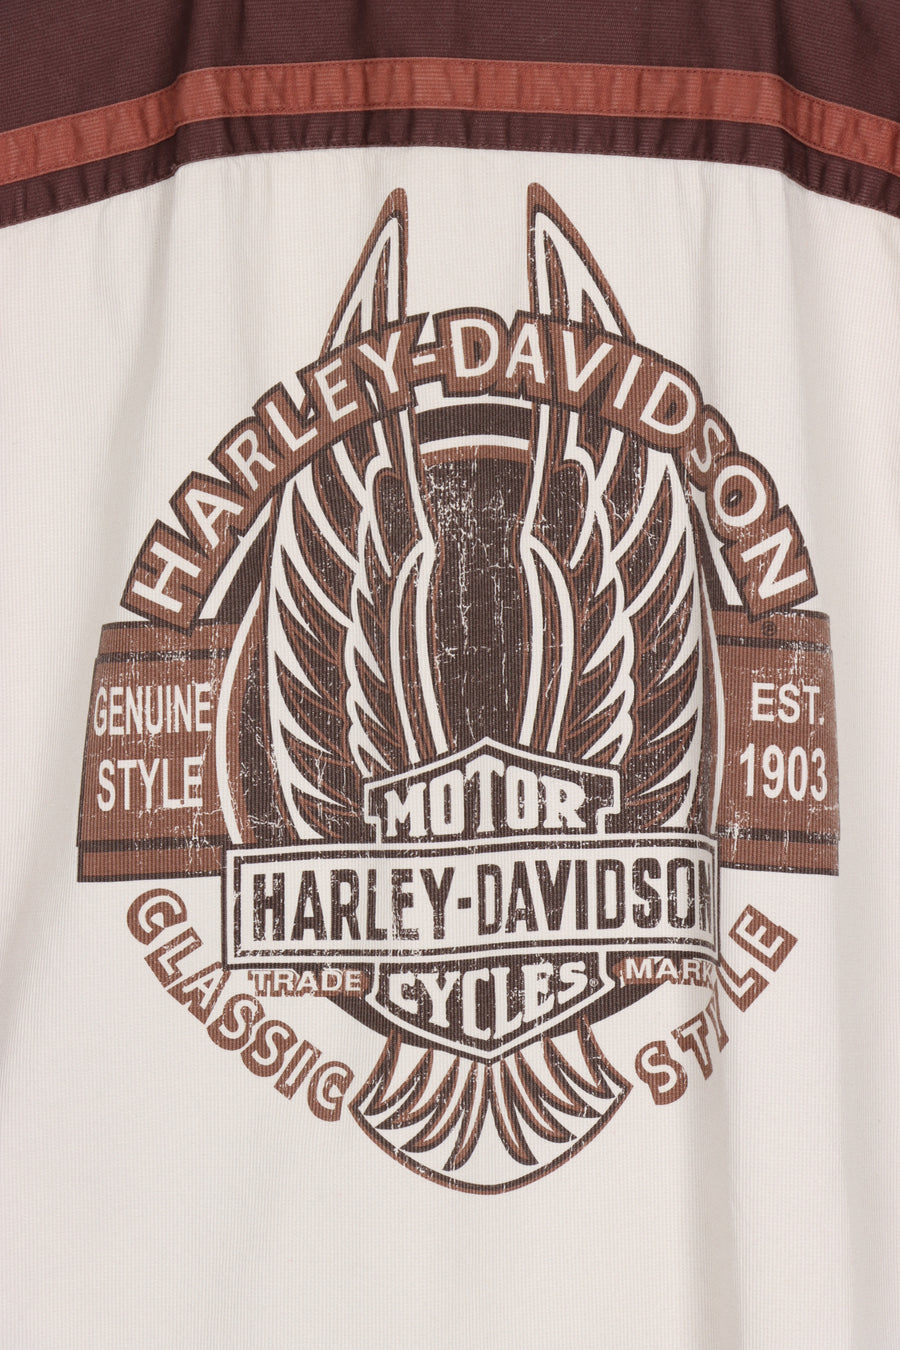 HARLEY DAVIDSON Brown Tones Eagle Wings Short Sleeve Shirt (XXL)